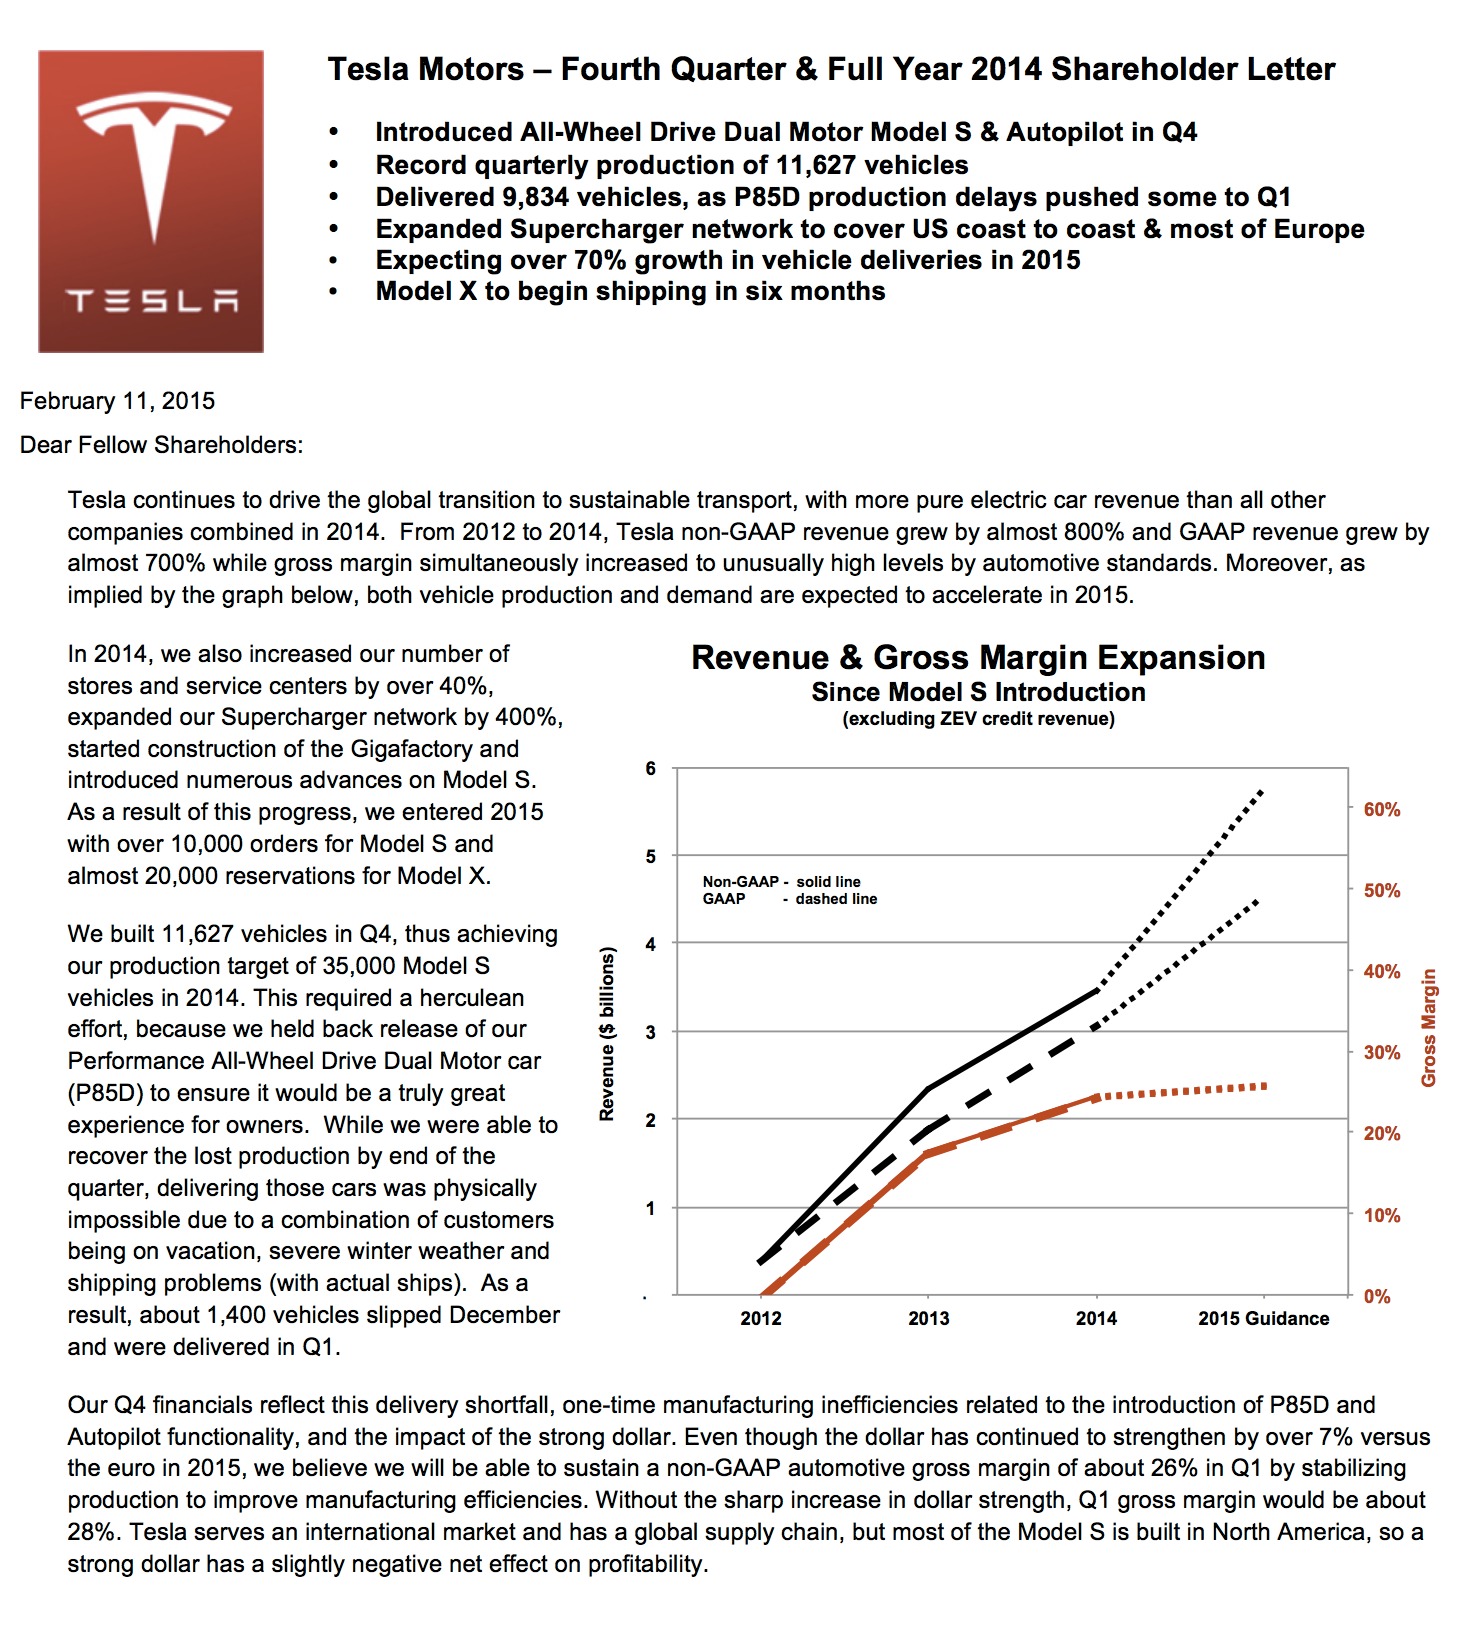 Tesla posts Q4 & Full Year 2014 Shareholder Letter and webcast - Electrek